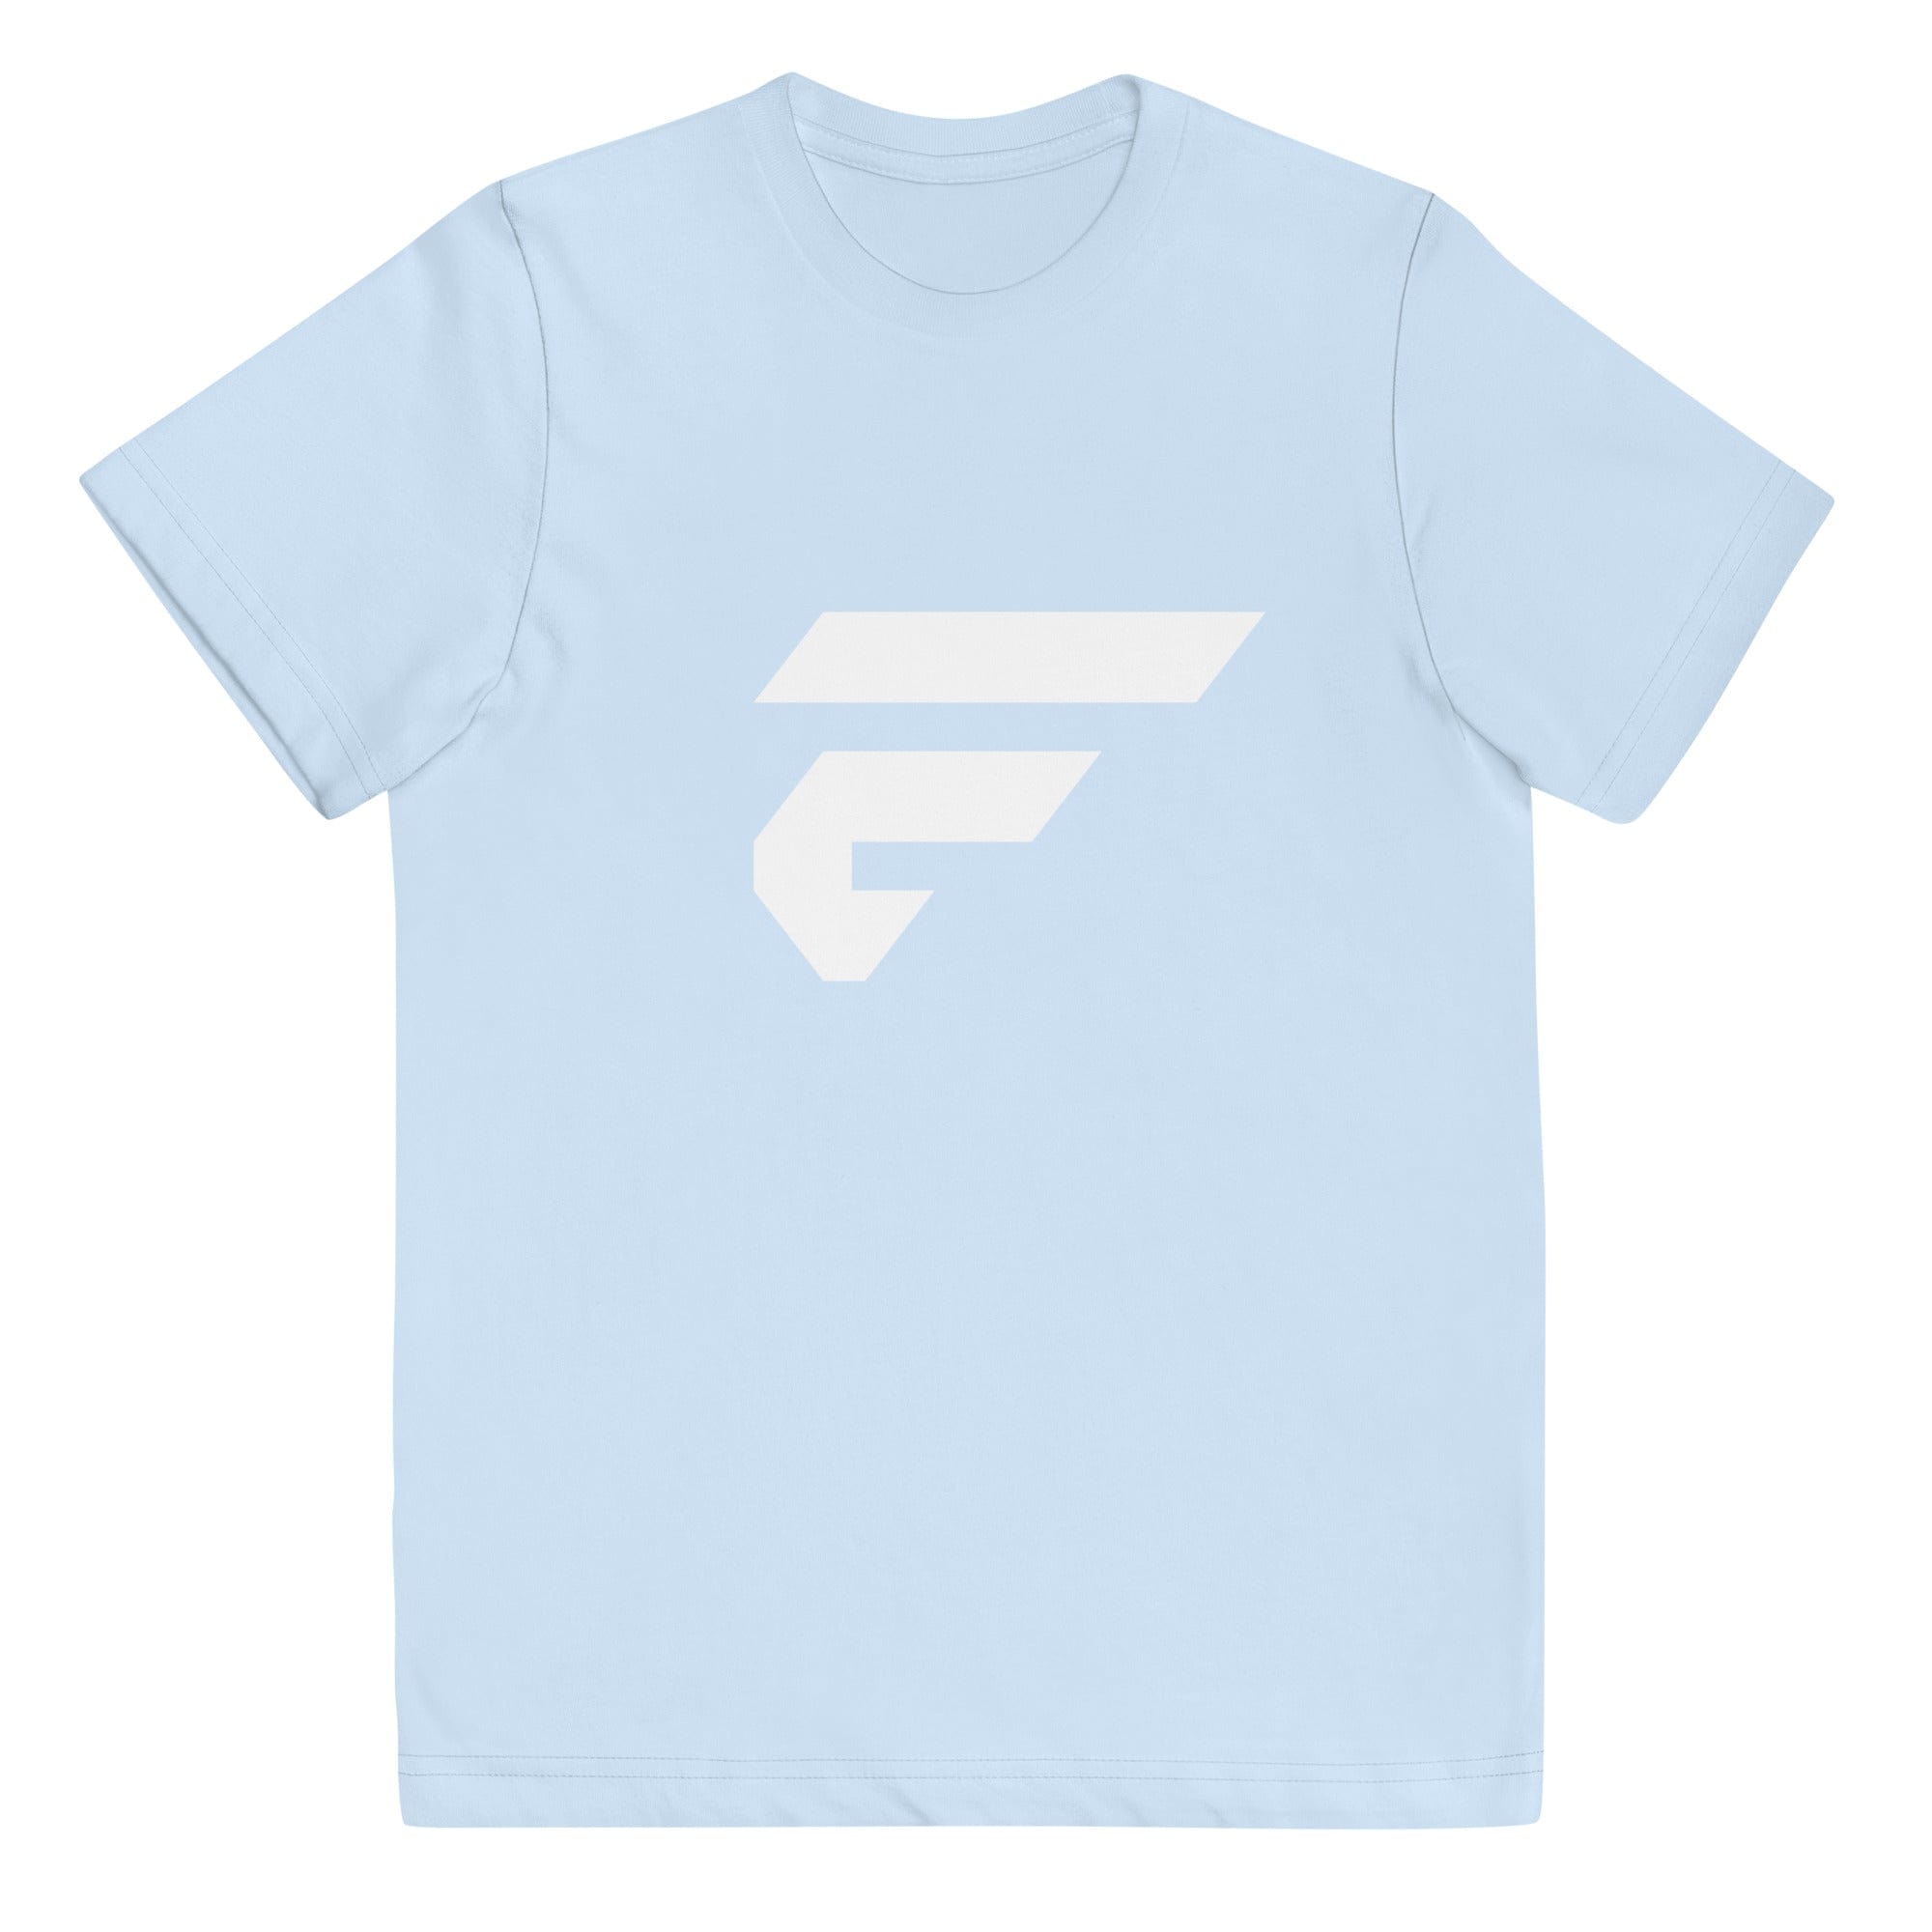 Youth light blue cotton jersey T-shirt with white Fire Cornhole F logo